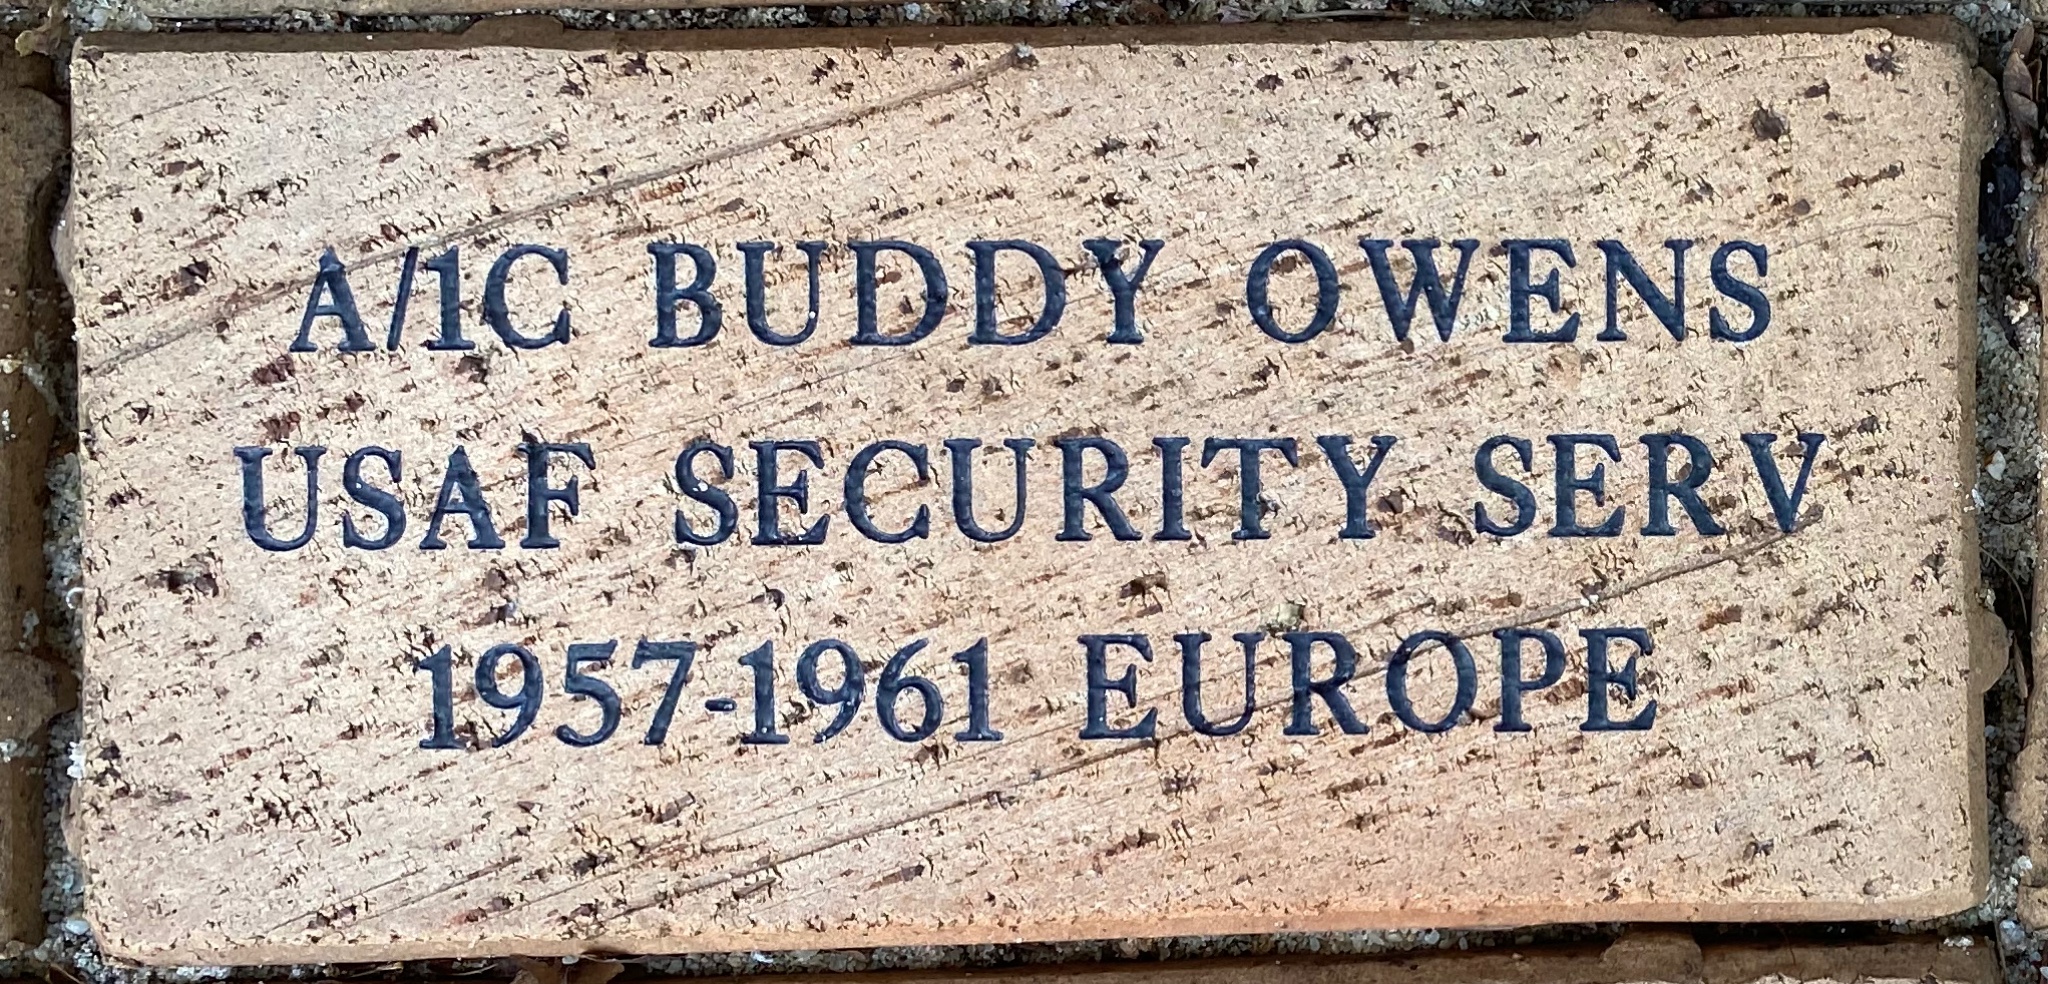 A/1C BUDDY OWENS USAF SECURITY SERVICE 1957-1961 EUROPE